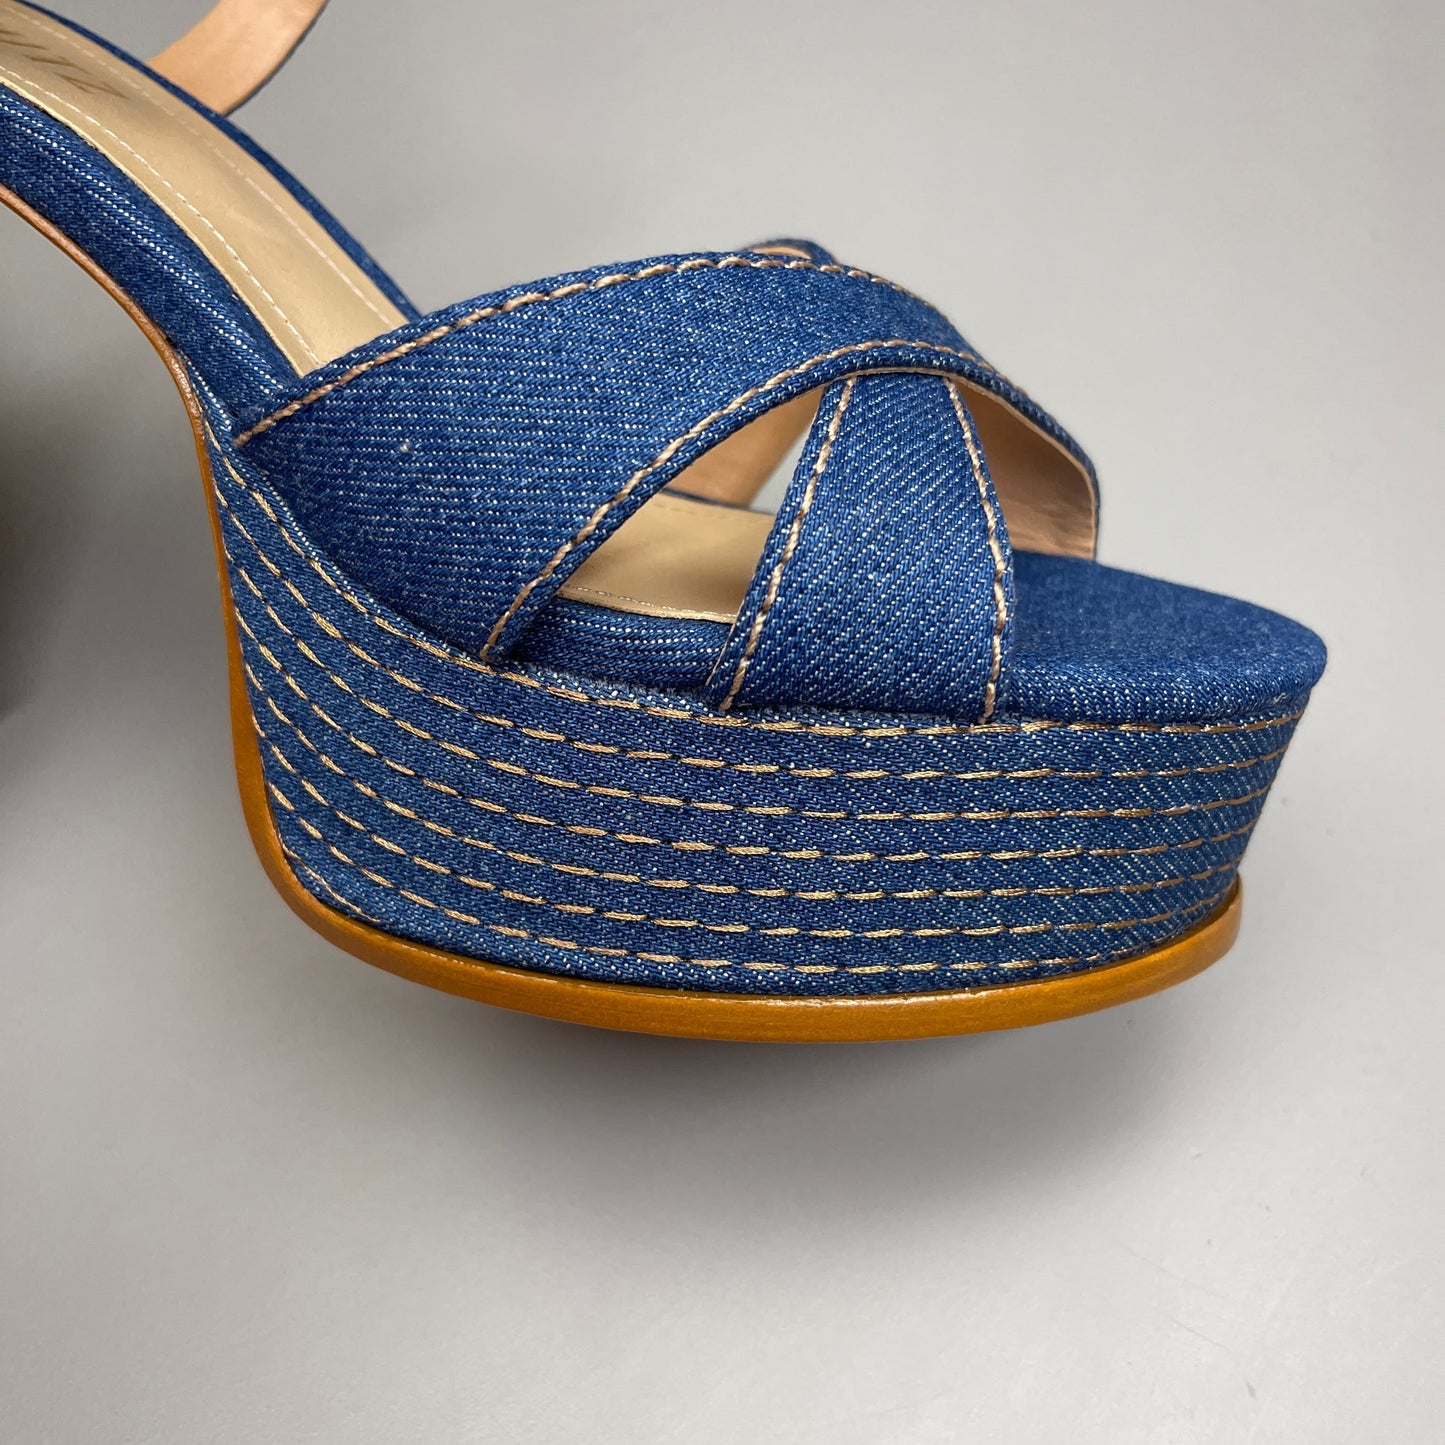 SCHUTZ Keefa Casual Denim Women's 4" Heeled Sandal Platform Blue Sz 10.5B (New)